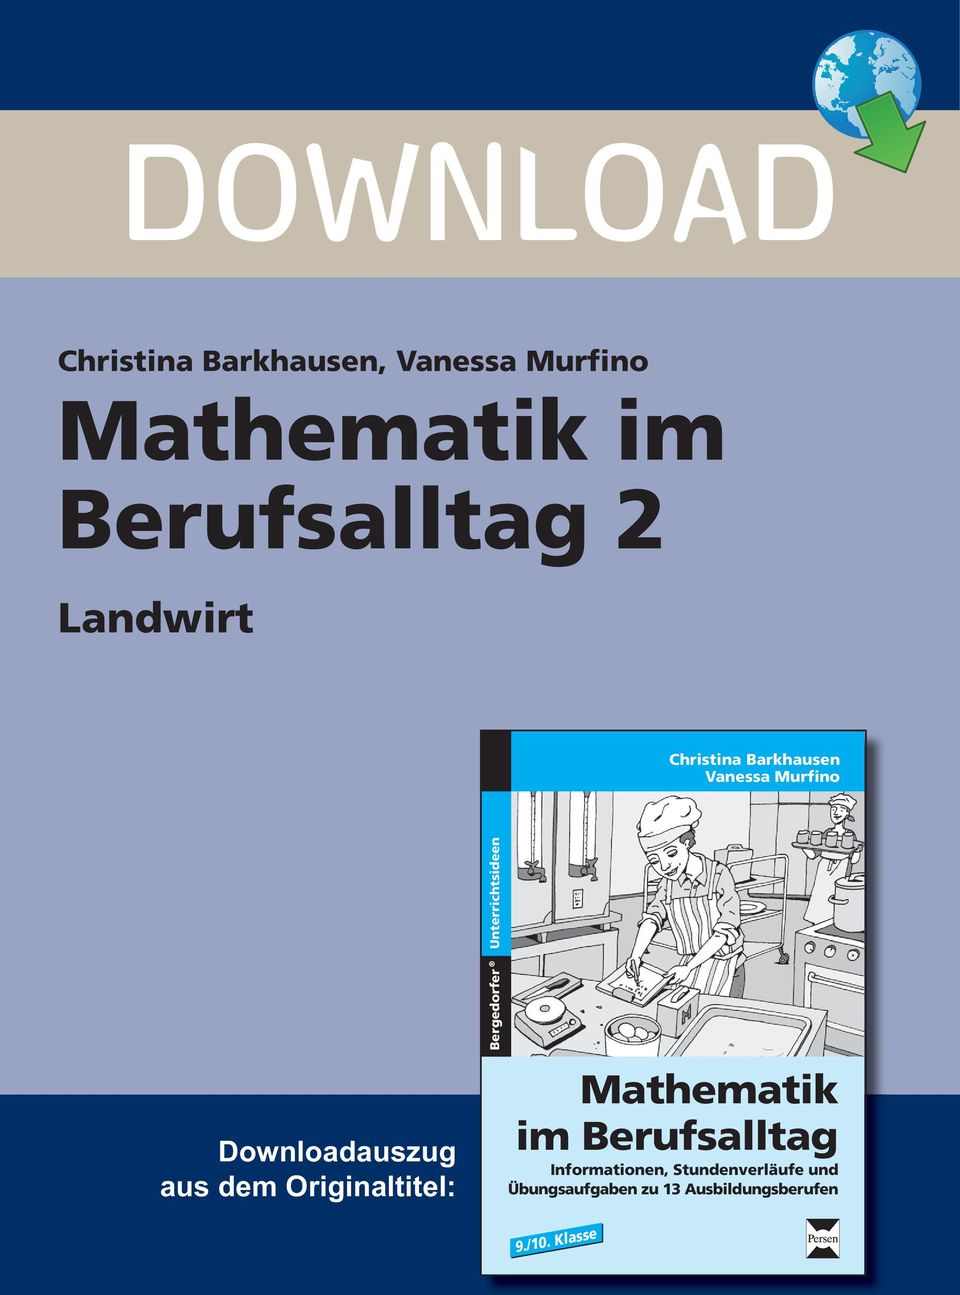 Downloadauszug aus dem Originaltitel: Mathematik im Berufsalltag